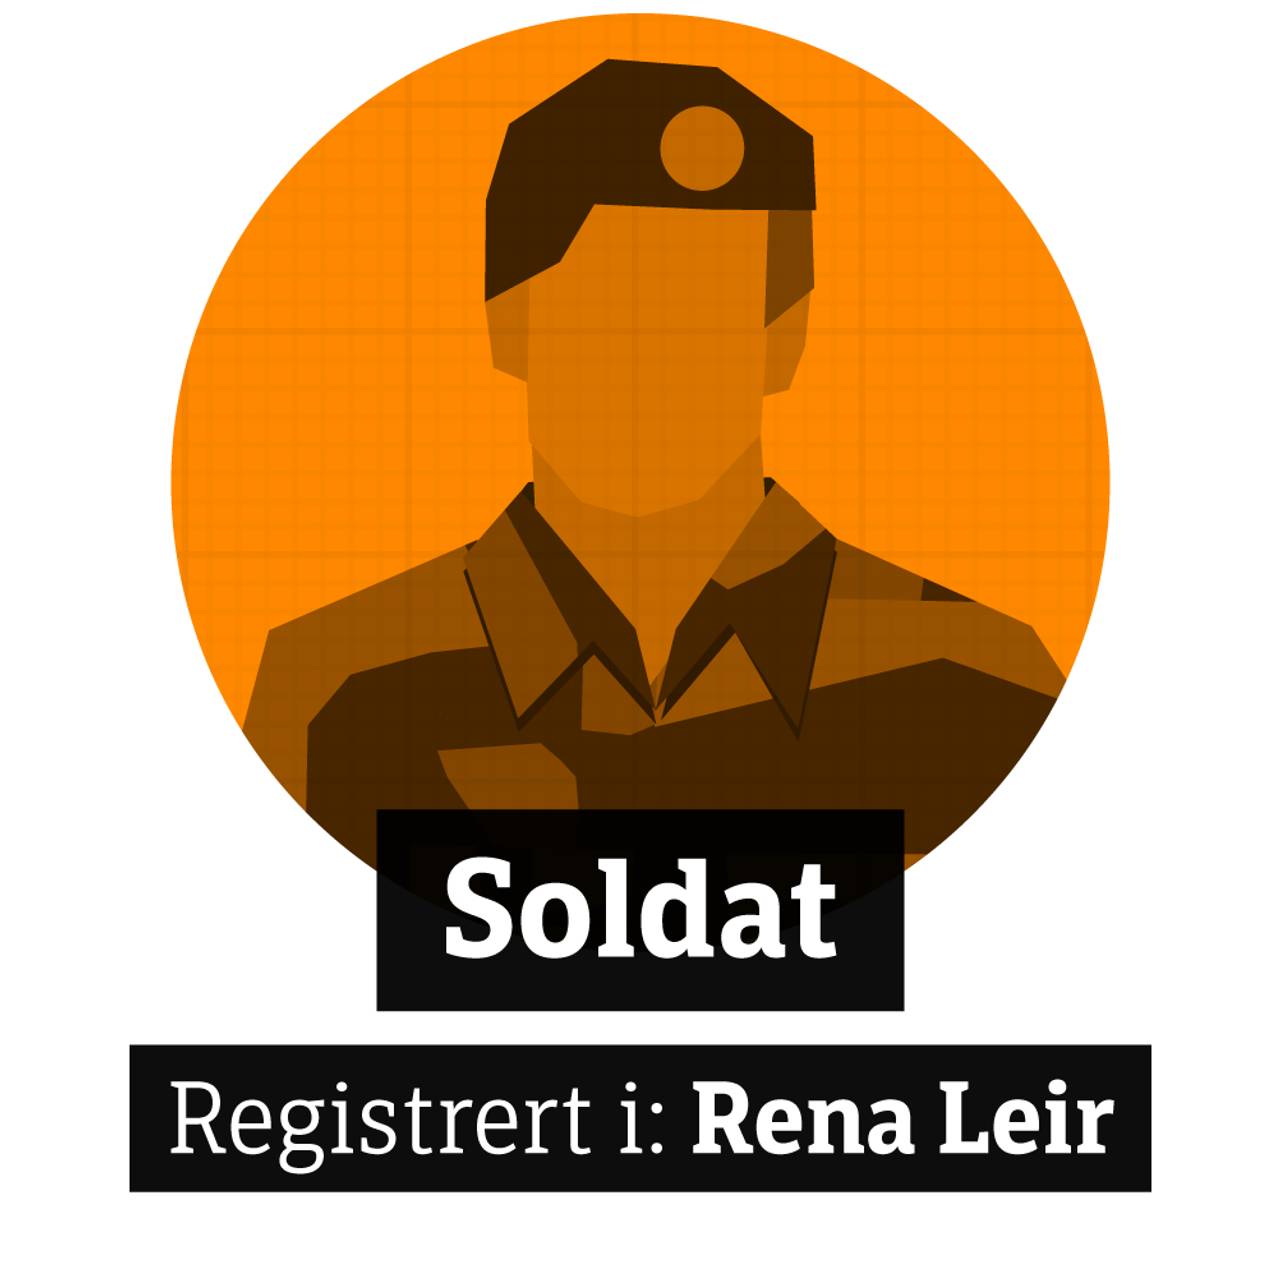 Silhuett av soldat med teksten: Registrert i Rena Leir 
.